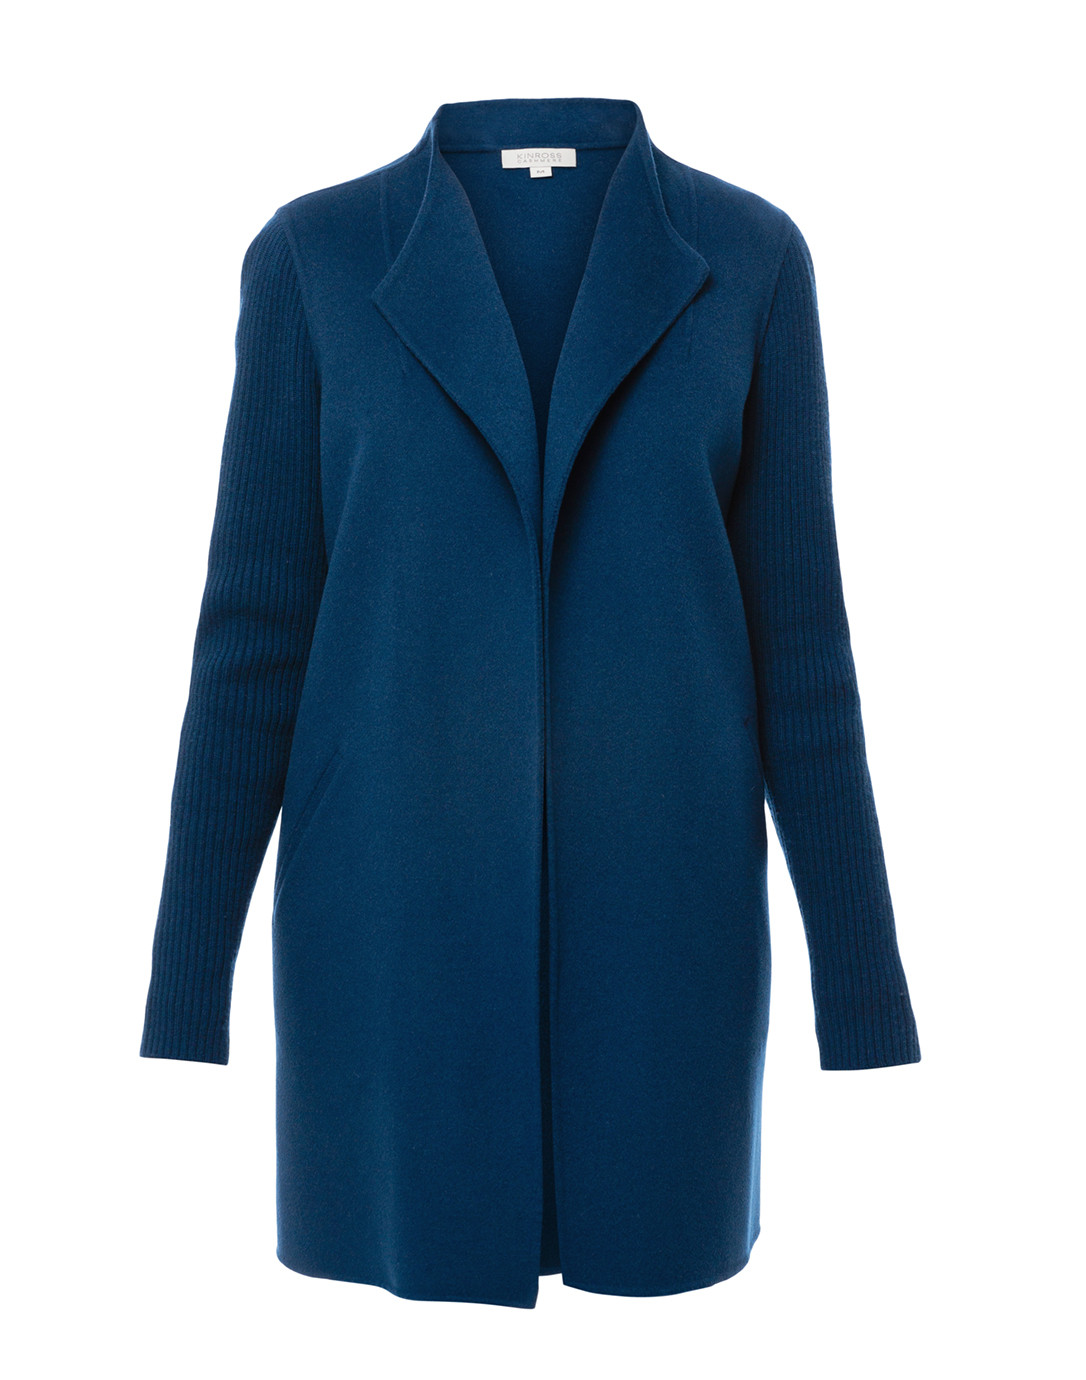 Winter Teal Blue Cashmere Coat | Kinross